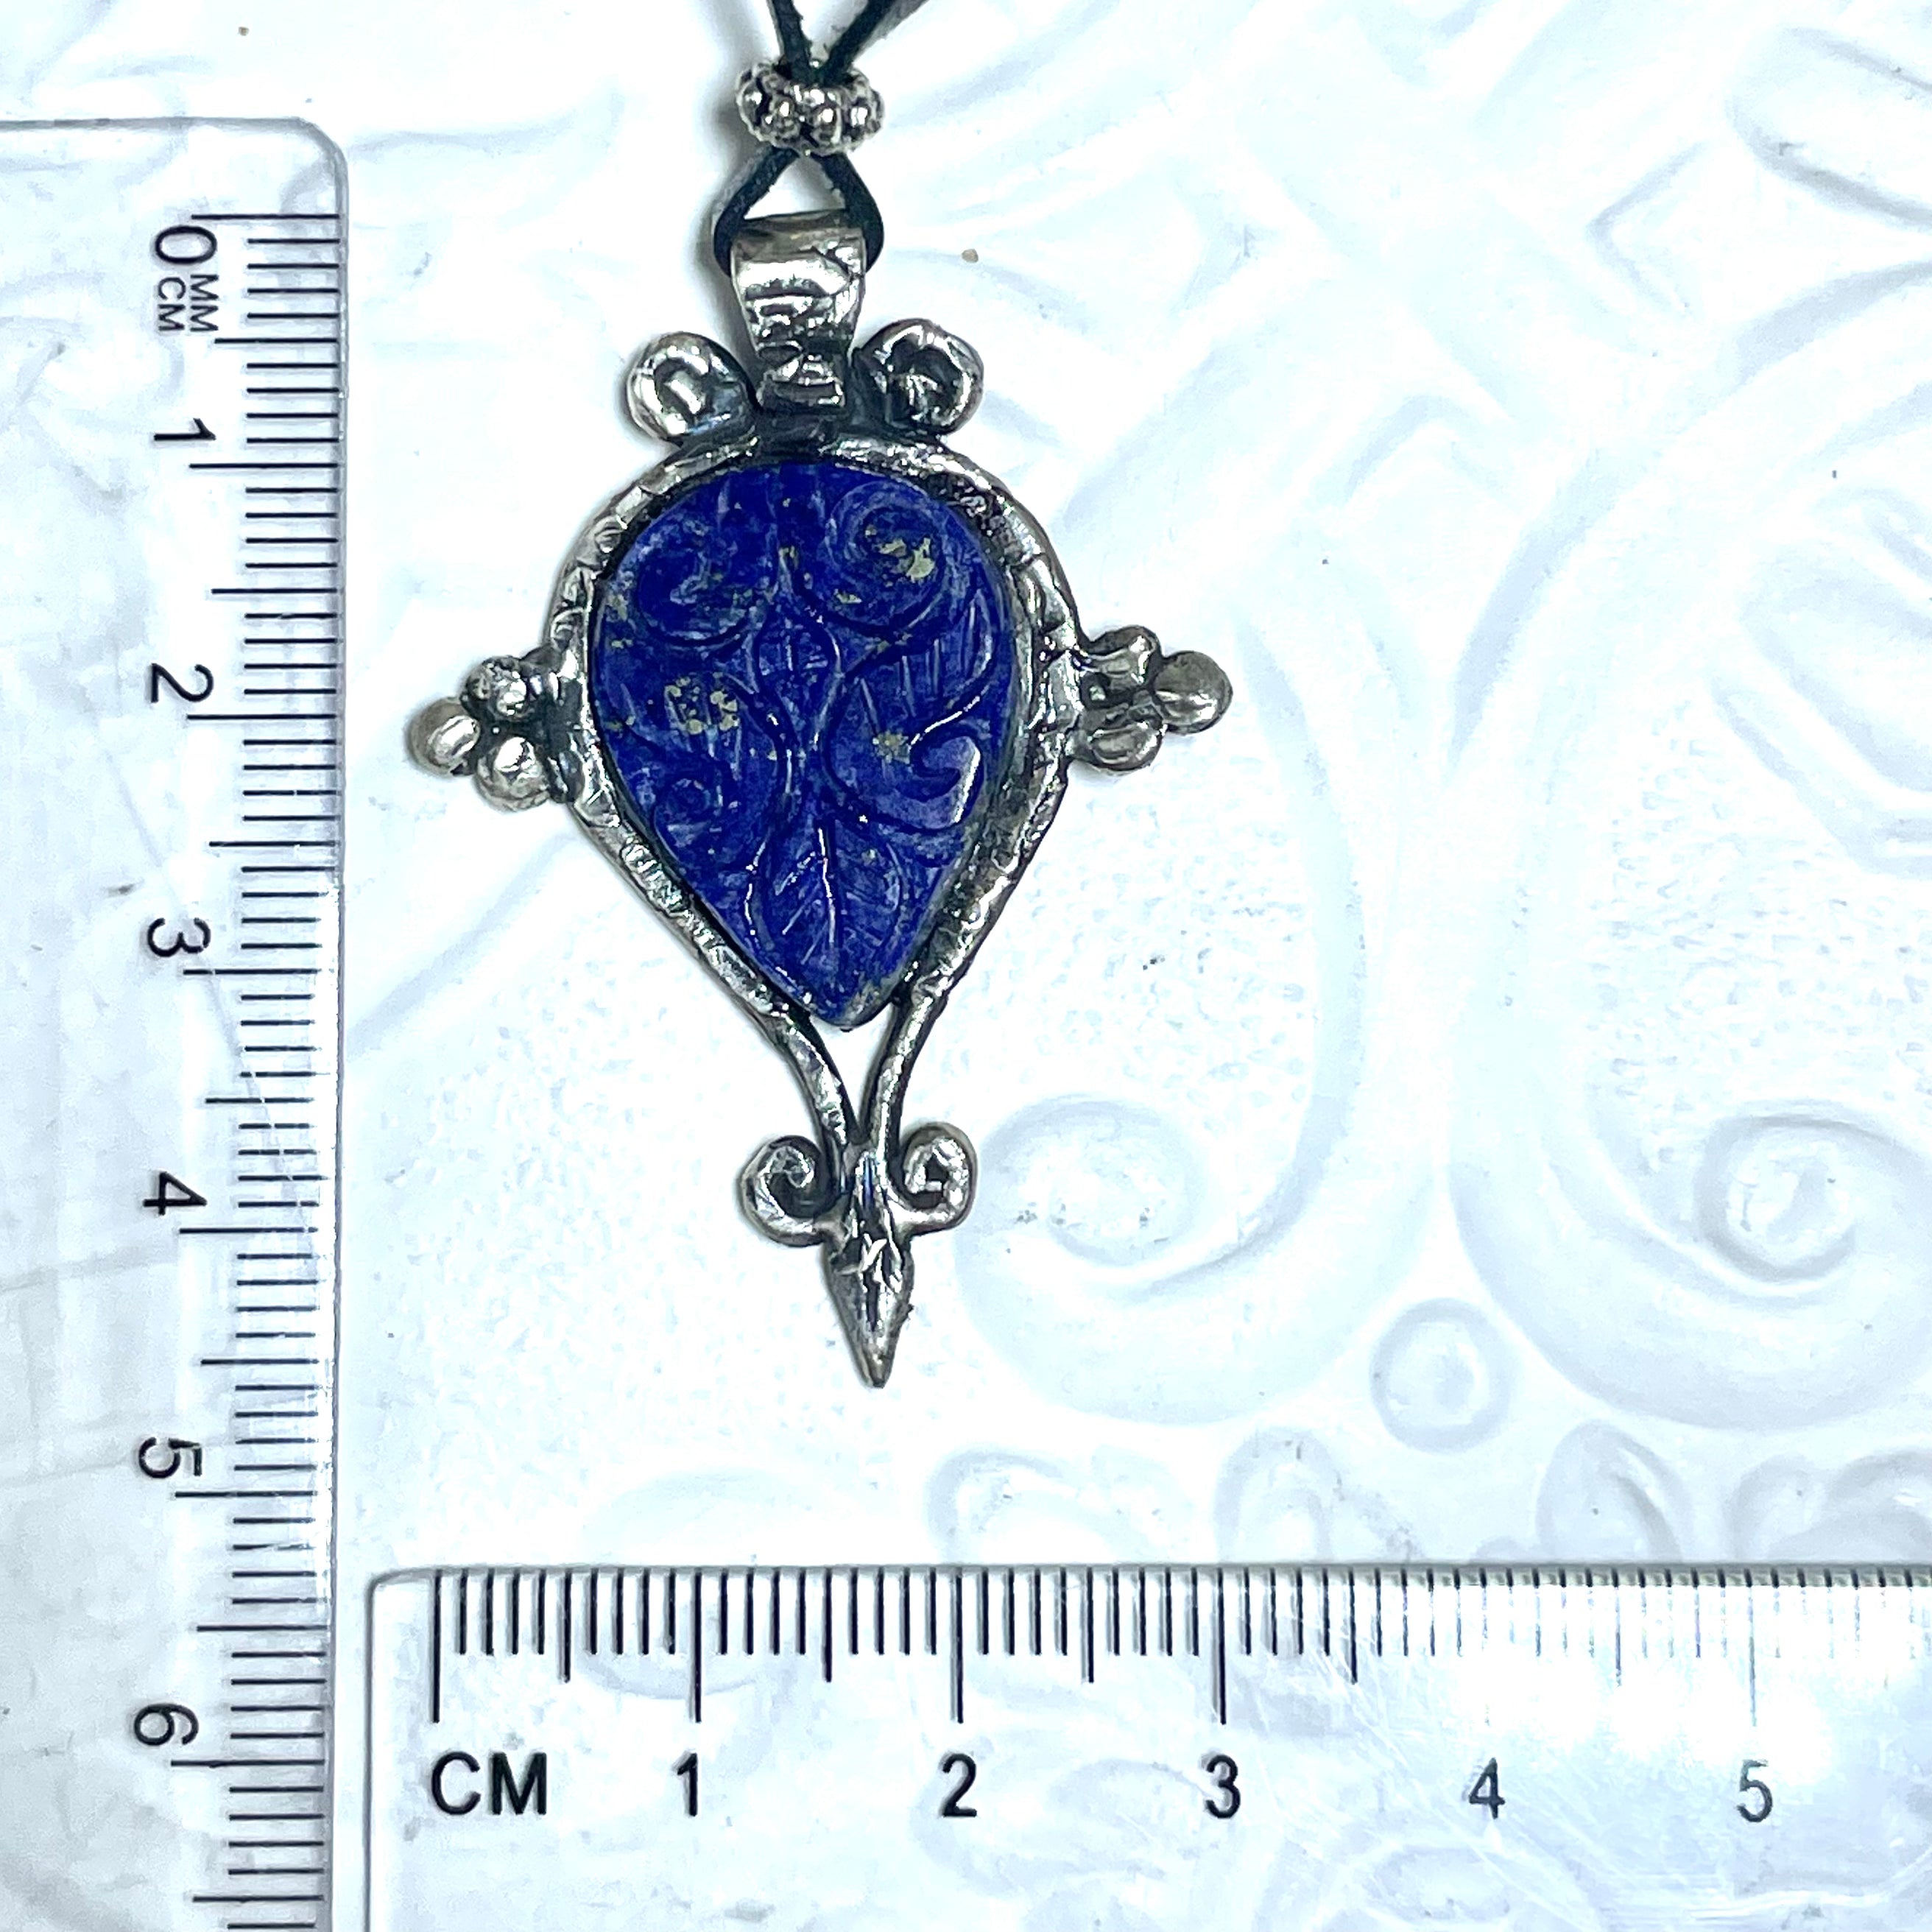 Carved Lapis Lazuli pendant